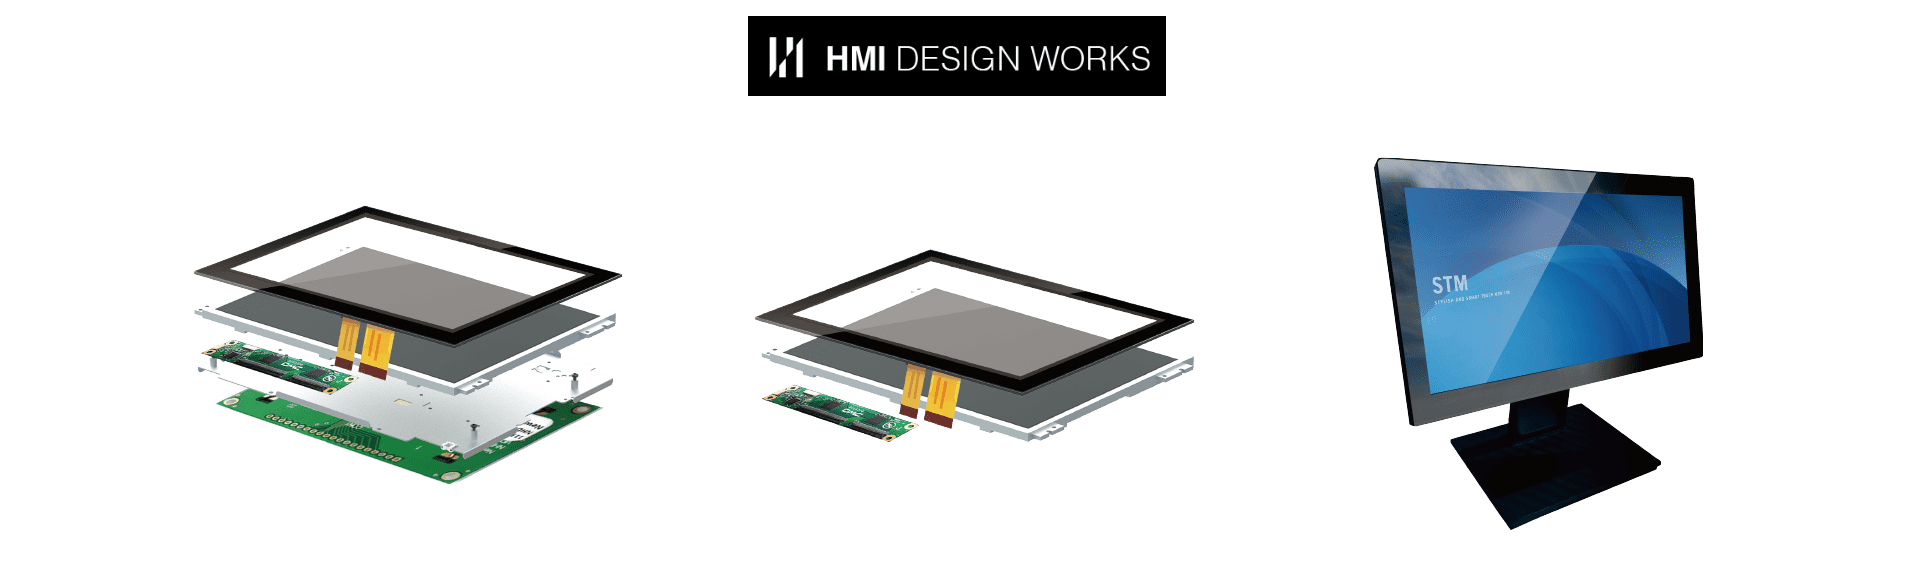 HMI DESIGN WORKS Image